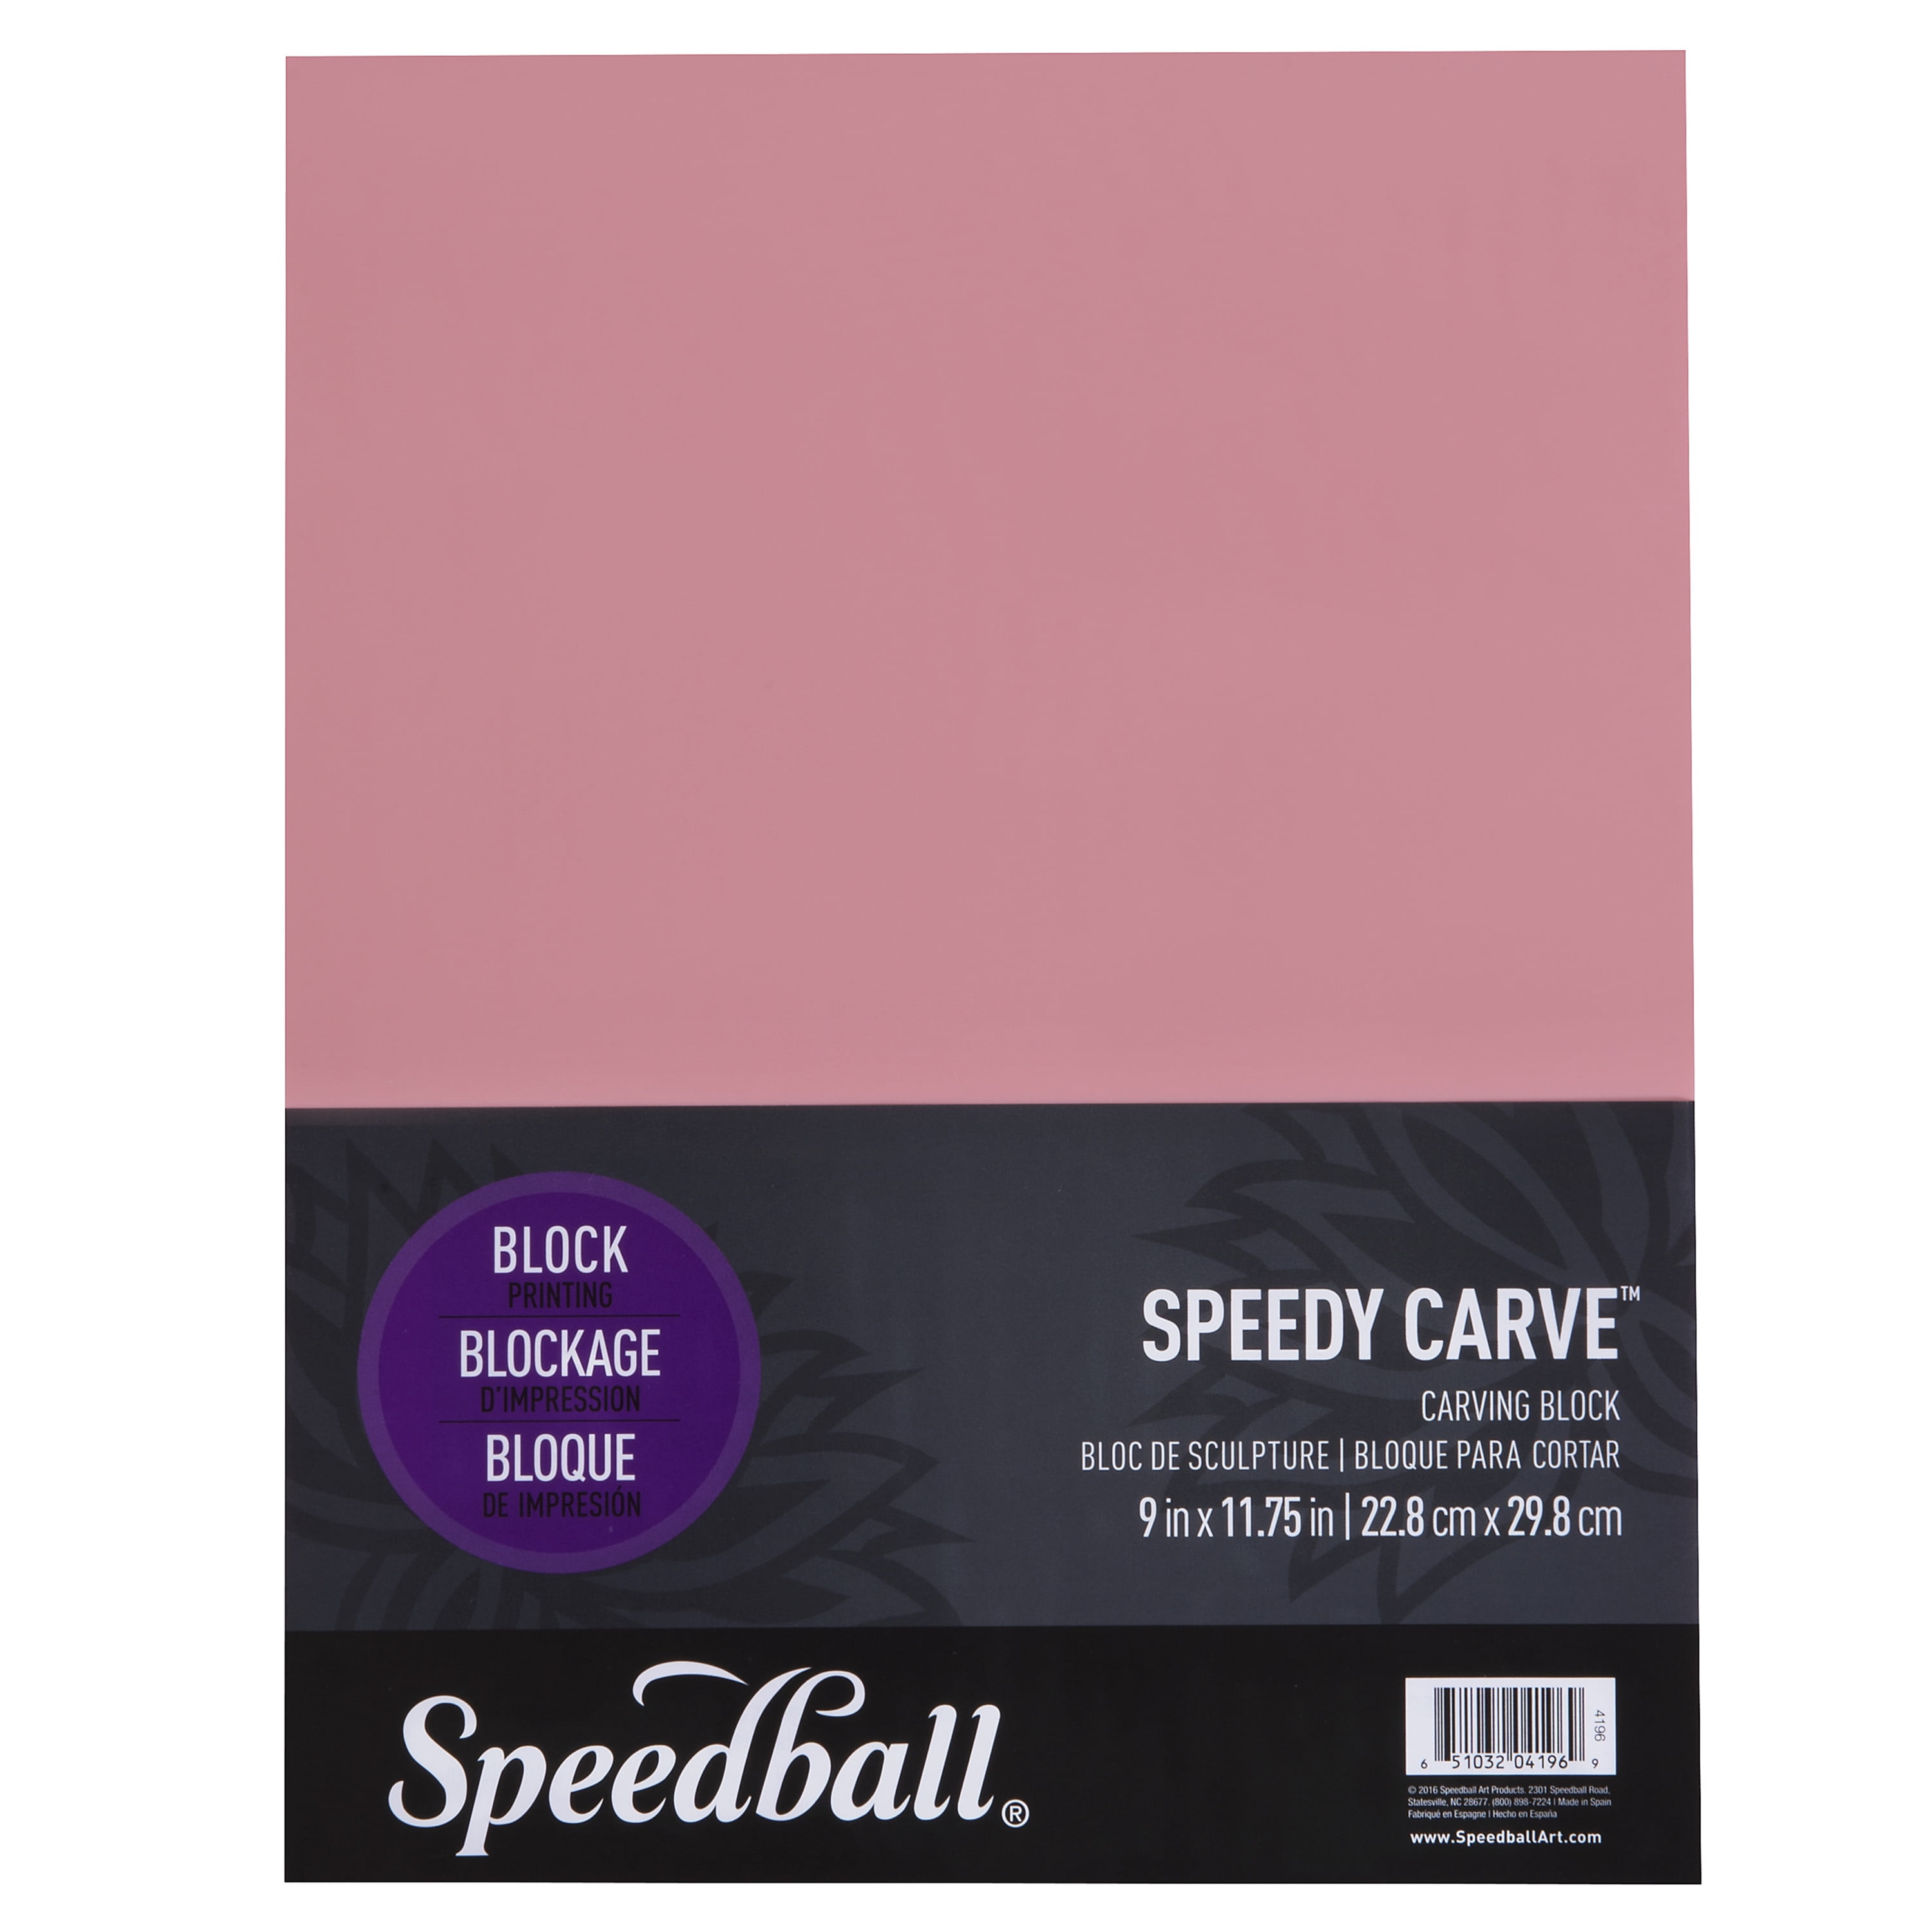 Speedball Art Products Speedball Speedy-Carve Stamp Making Kit